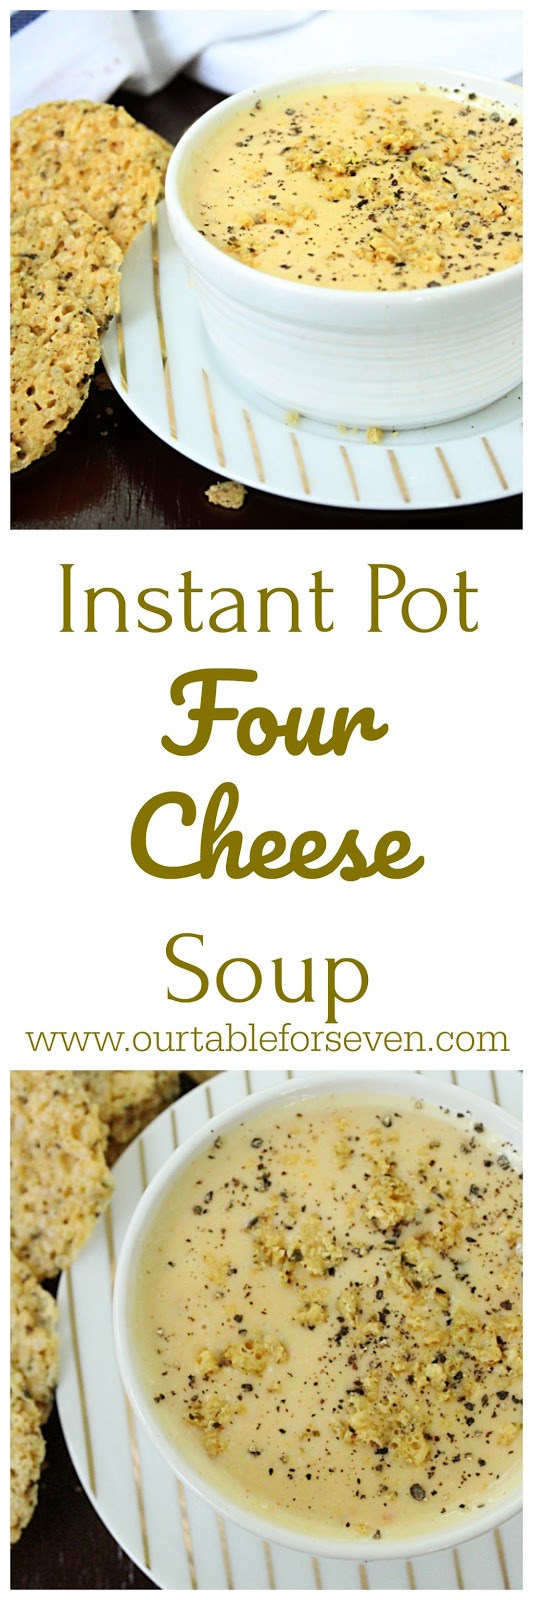 Instant Pot Four Cheese Soup